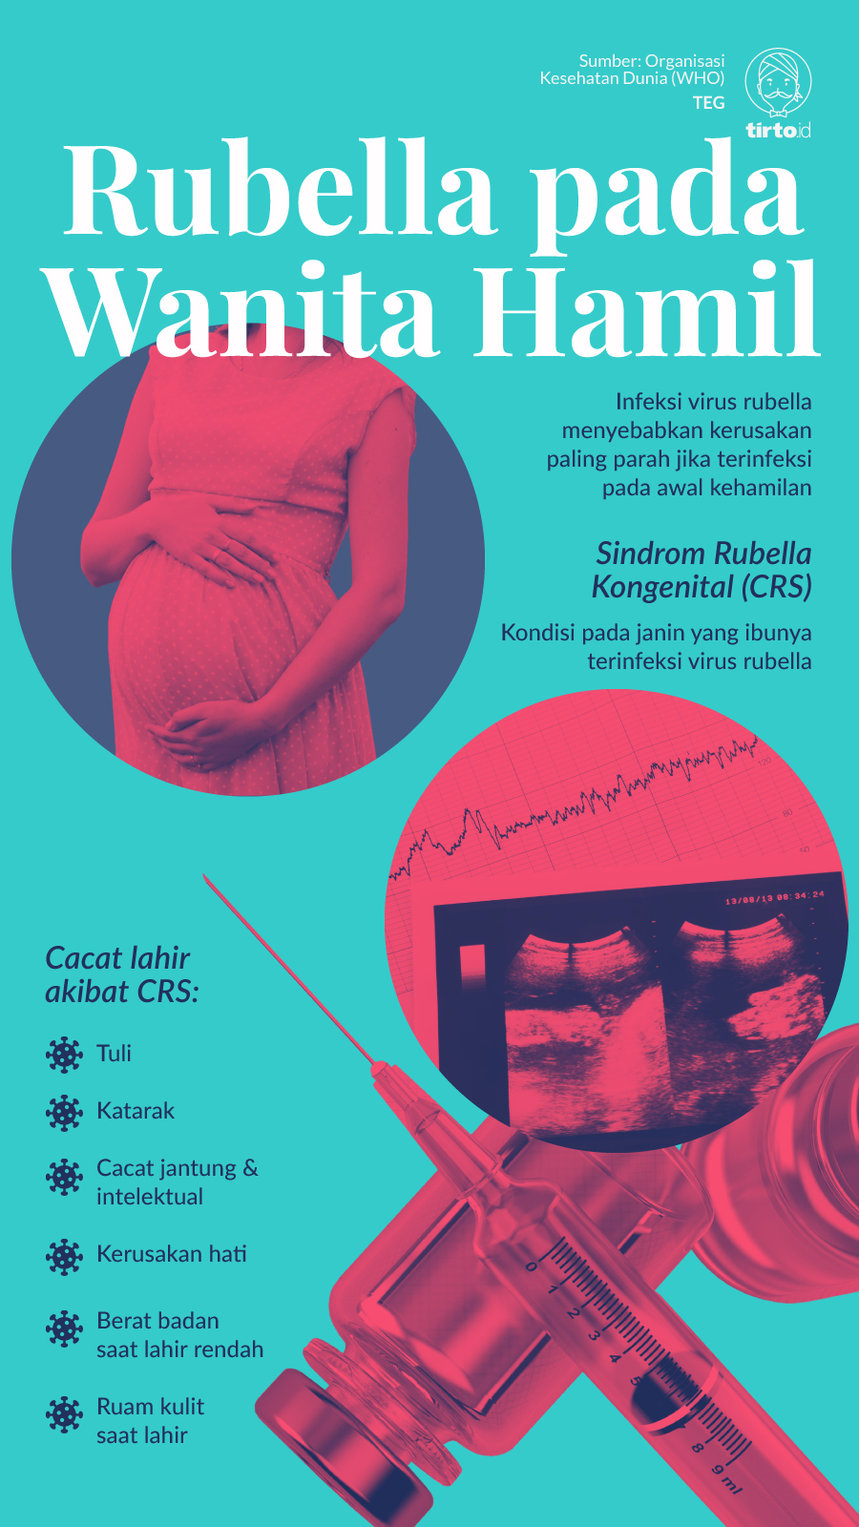 Infografik Rubella Pada wanita Hamil